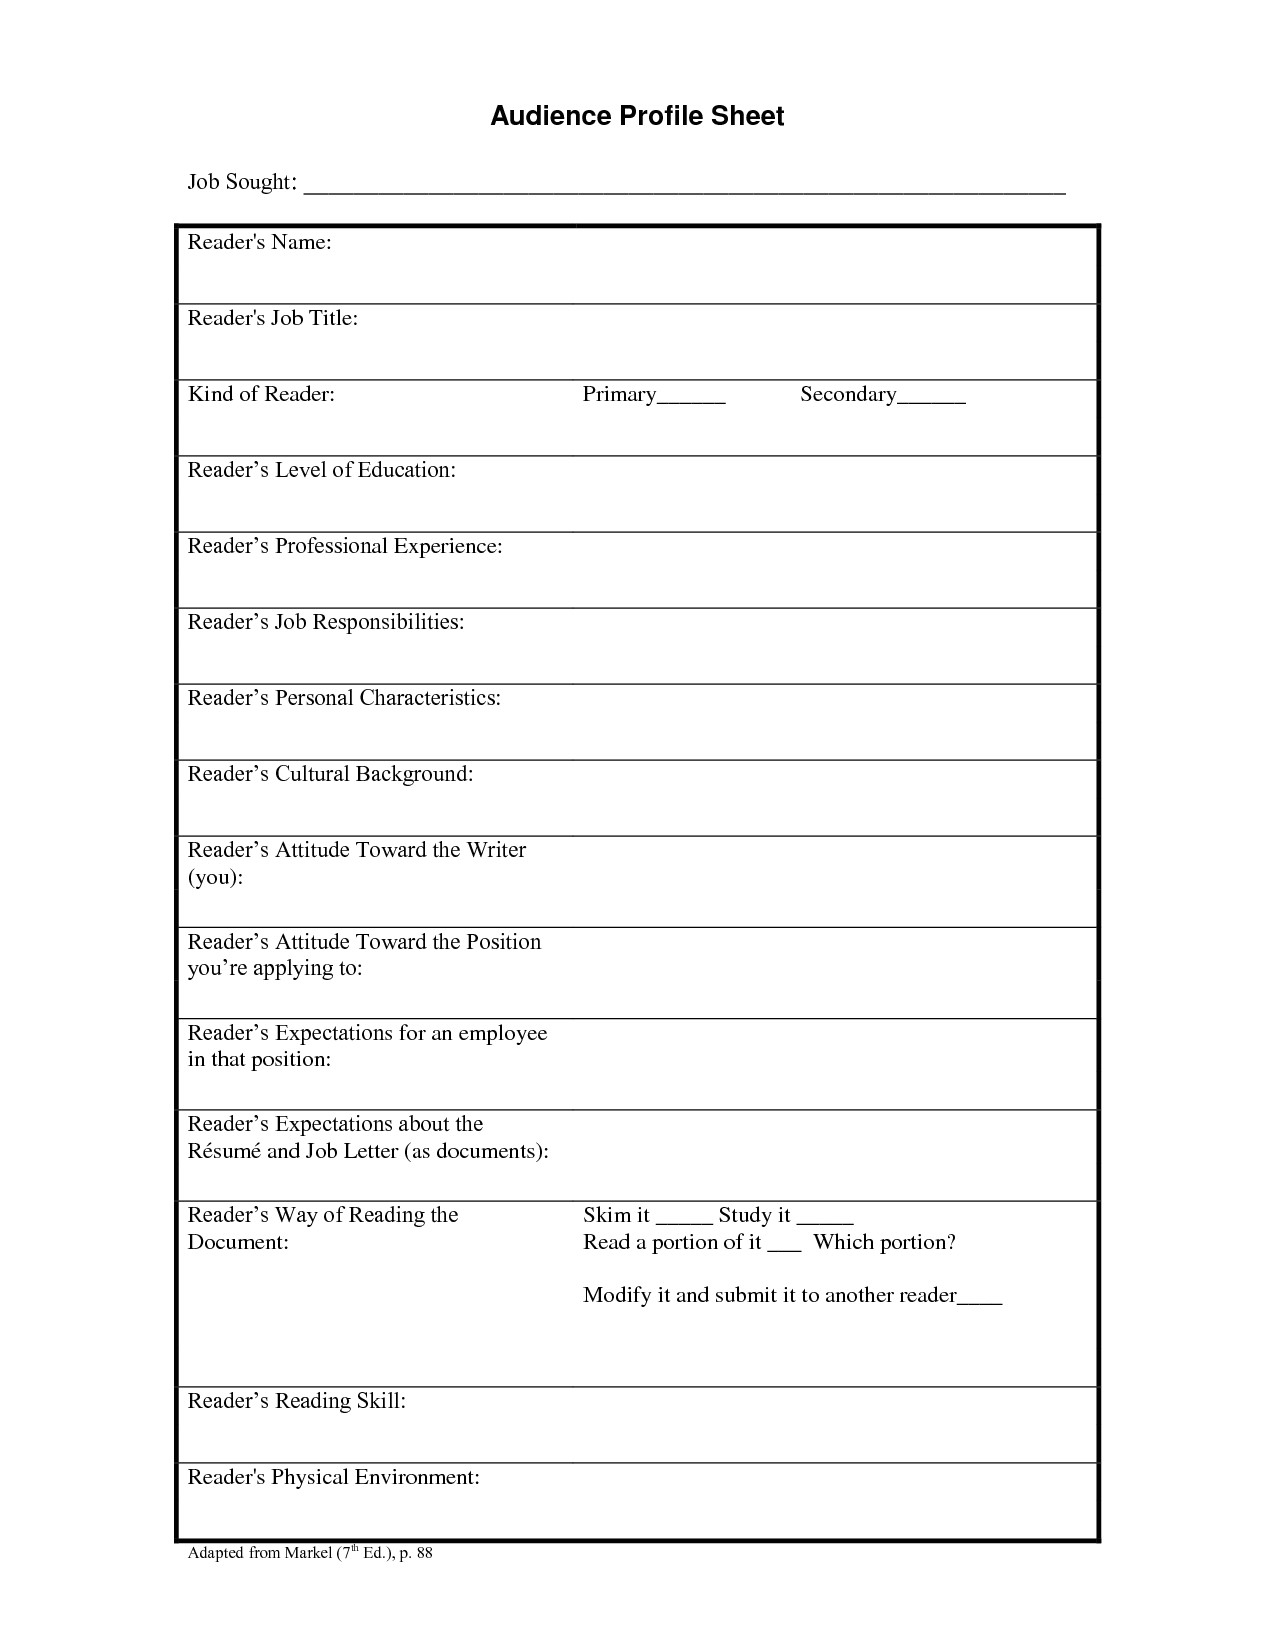 post sample student profile sheet 605248